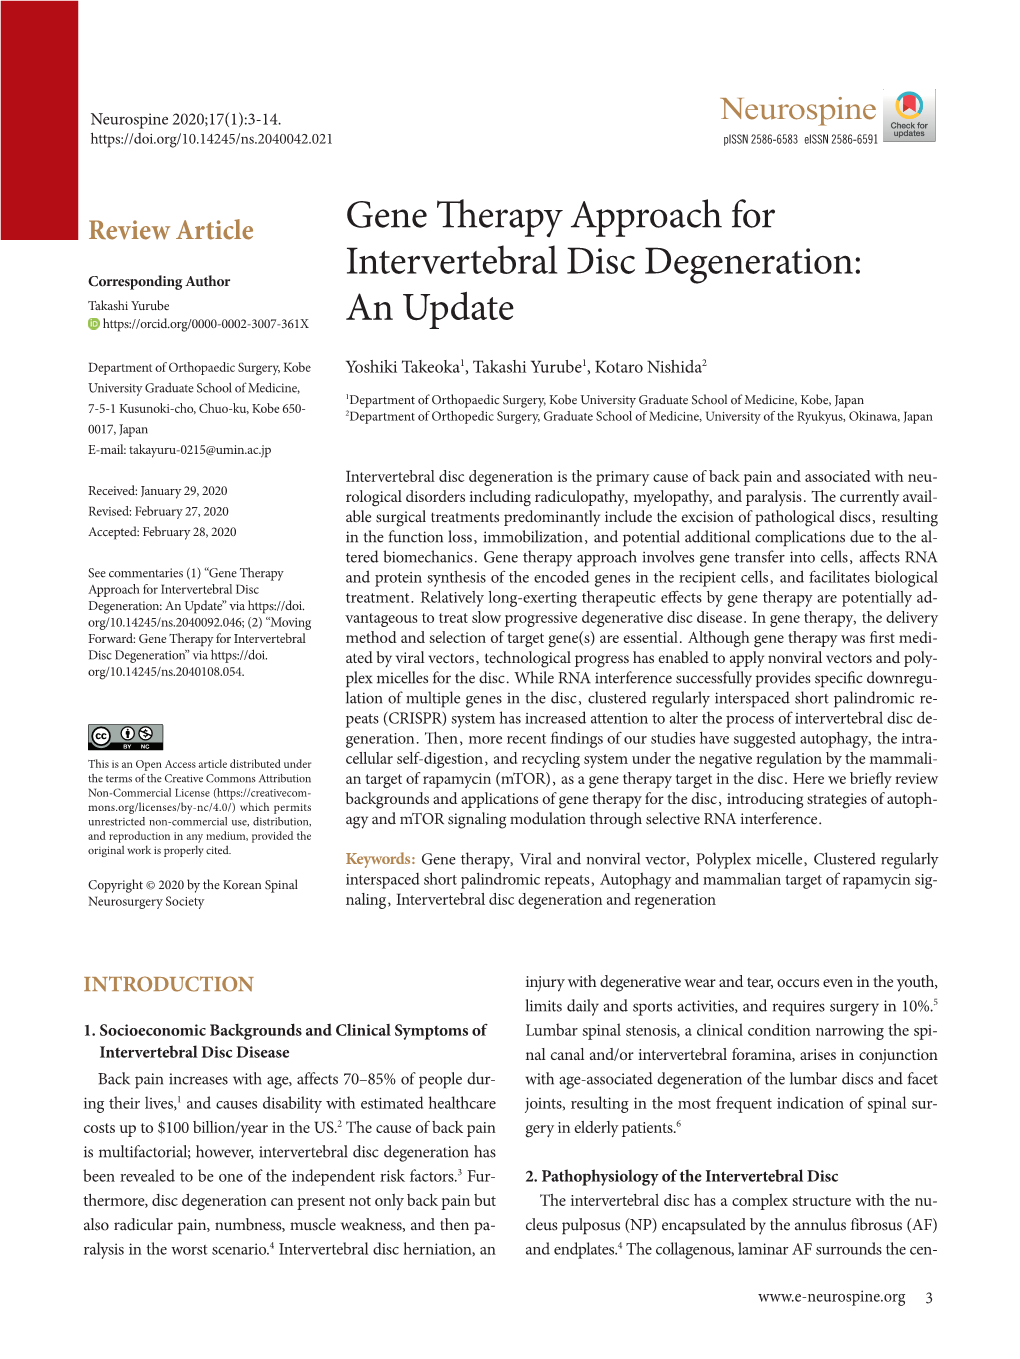 Gene Therapy Approach for Intervertebral Disc Degeneration